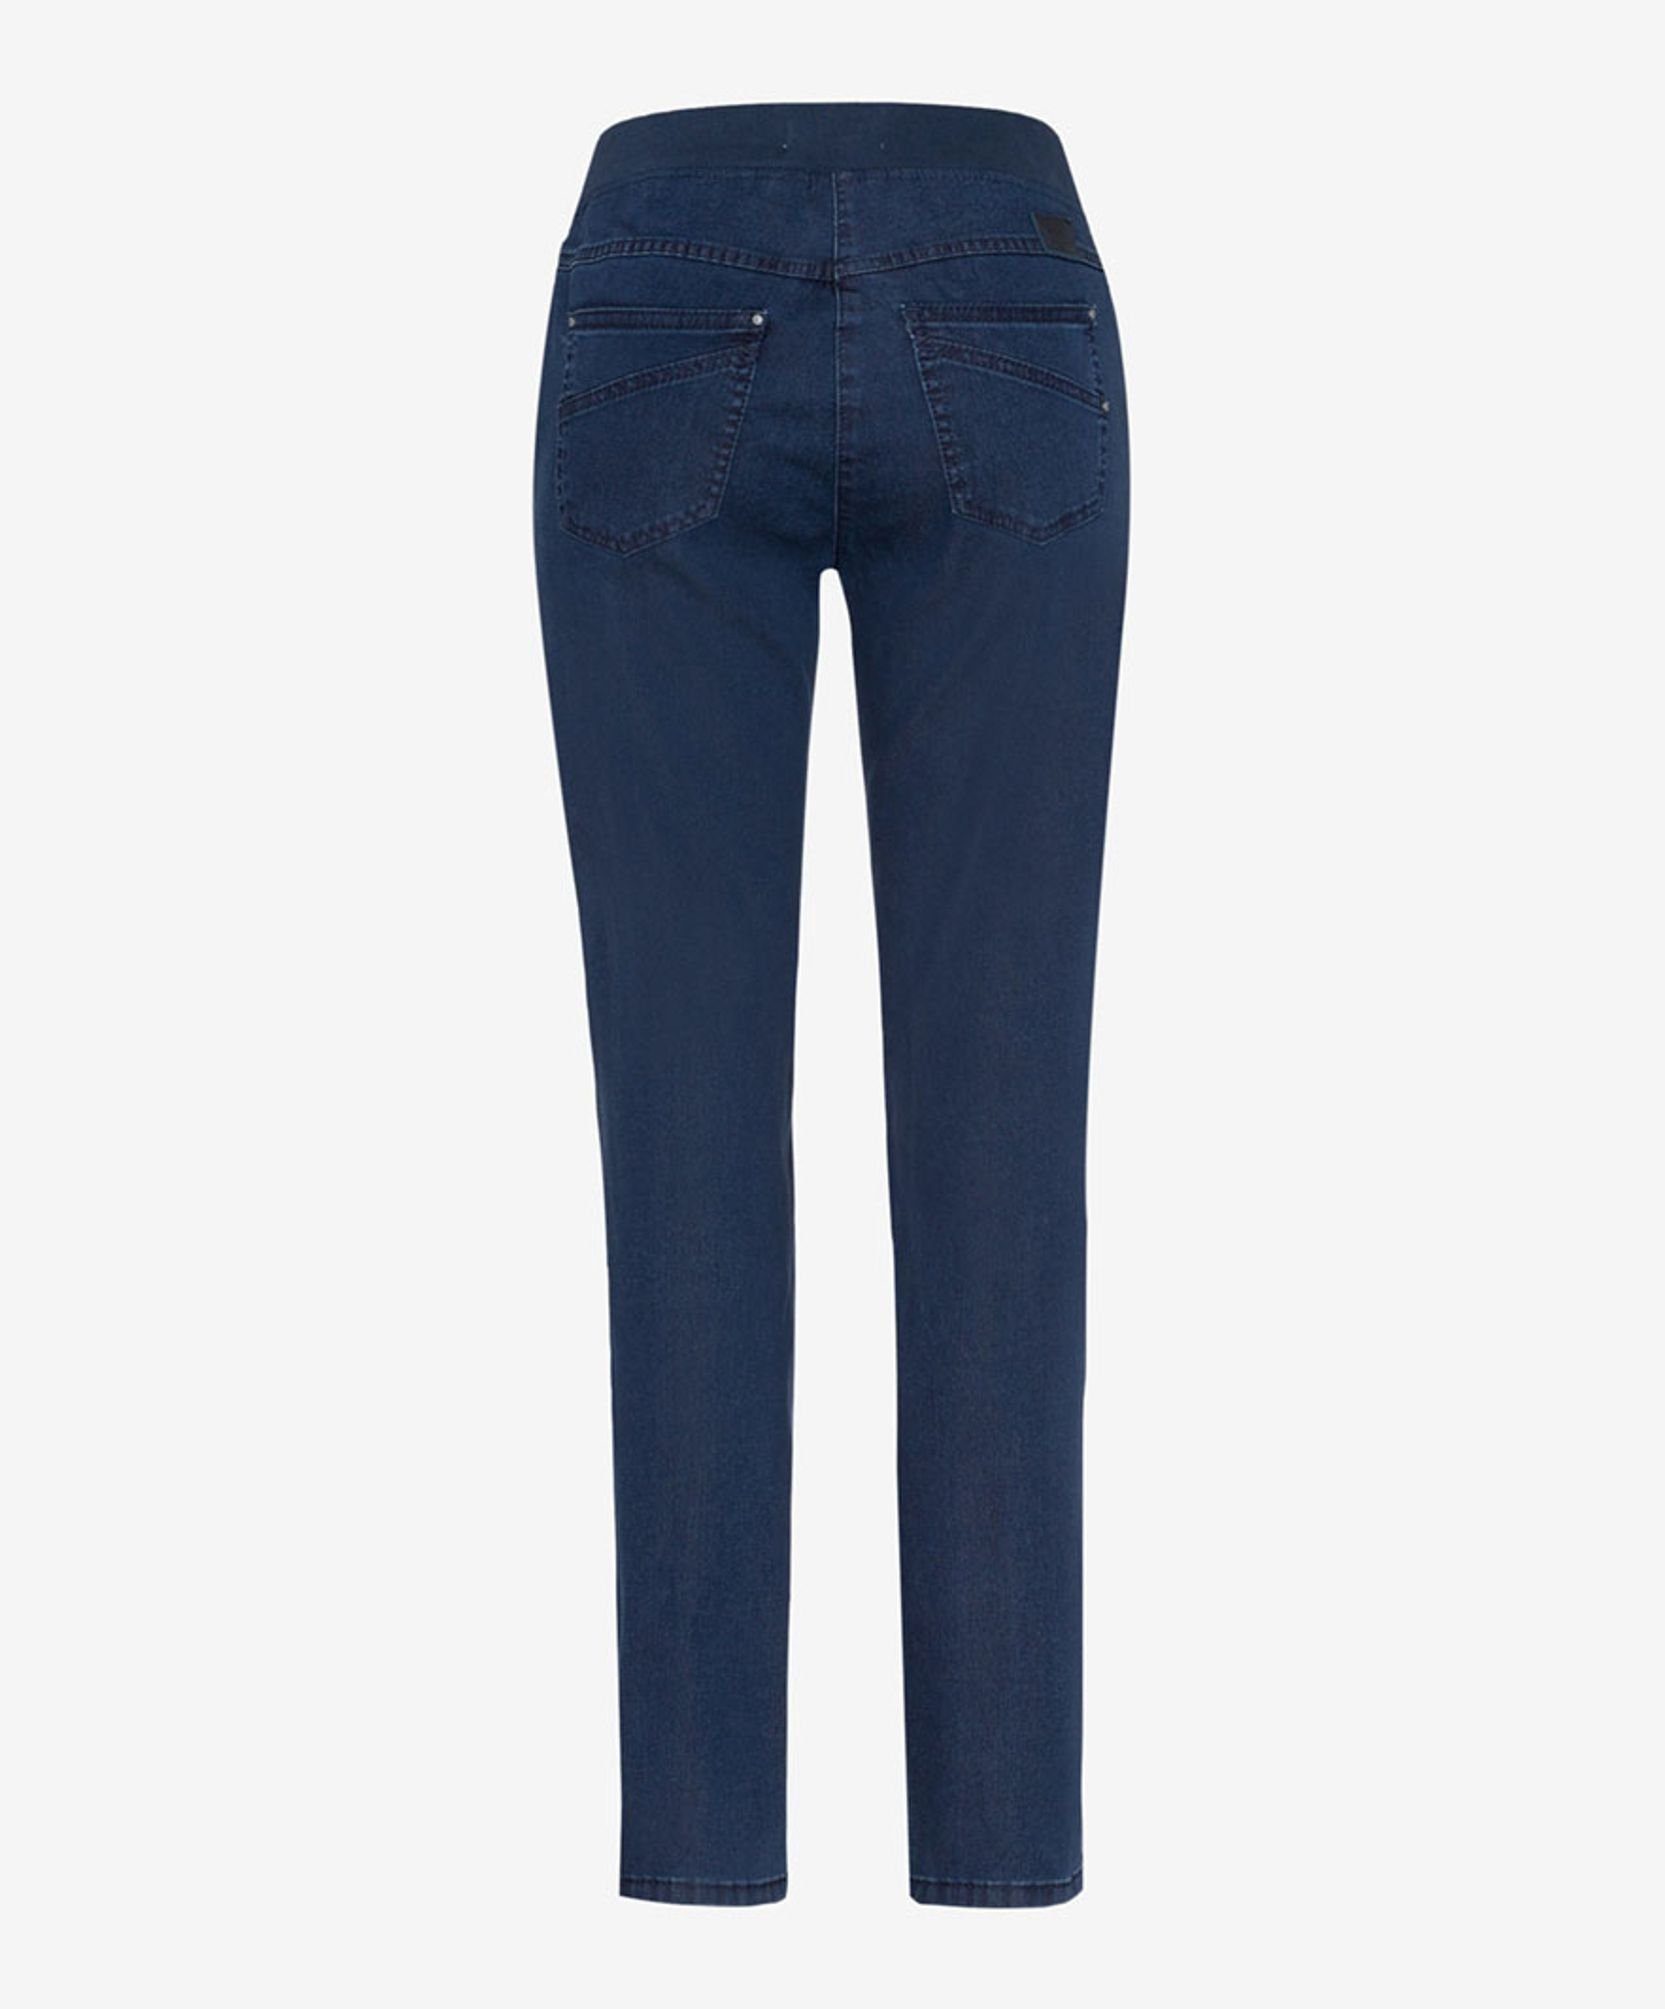 (25) 5-Pocket-Jeans Stoned BRAX RAPHAELA 10-6220 by